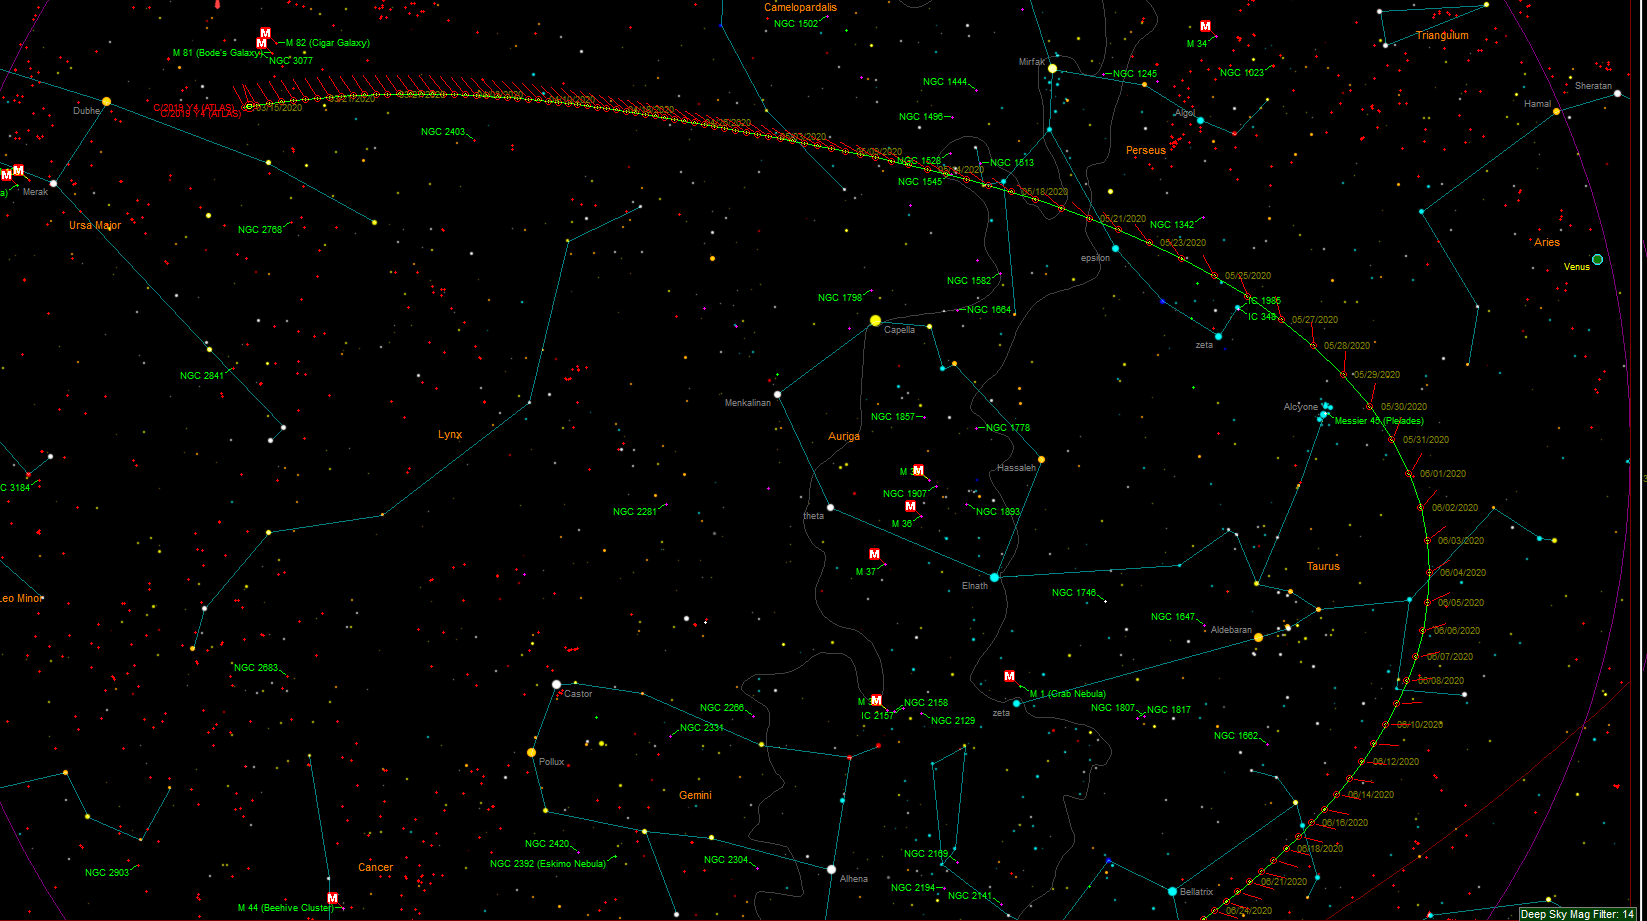 Comet leonard stellarium - mobilenipod